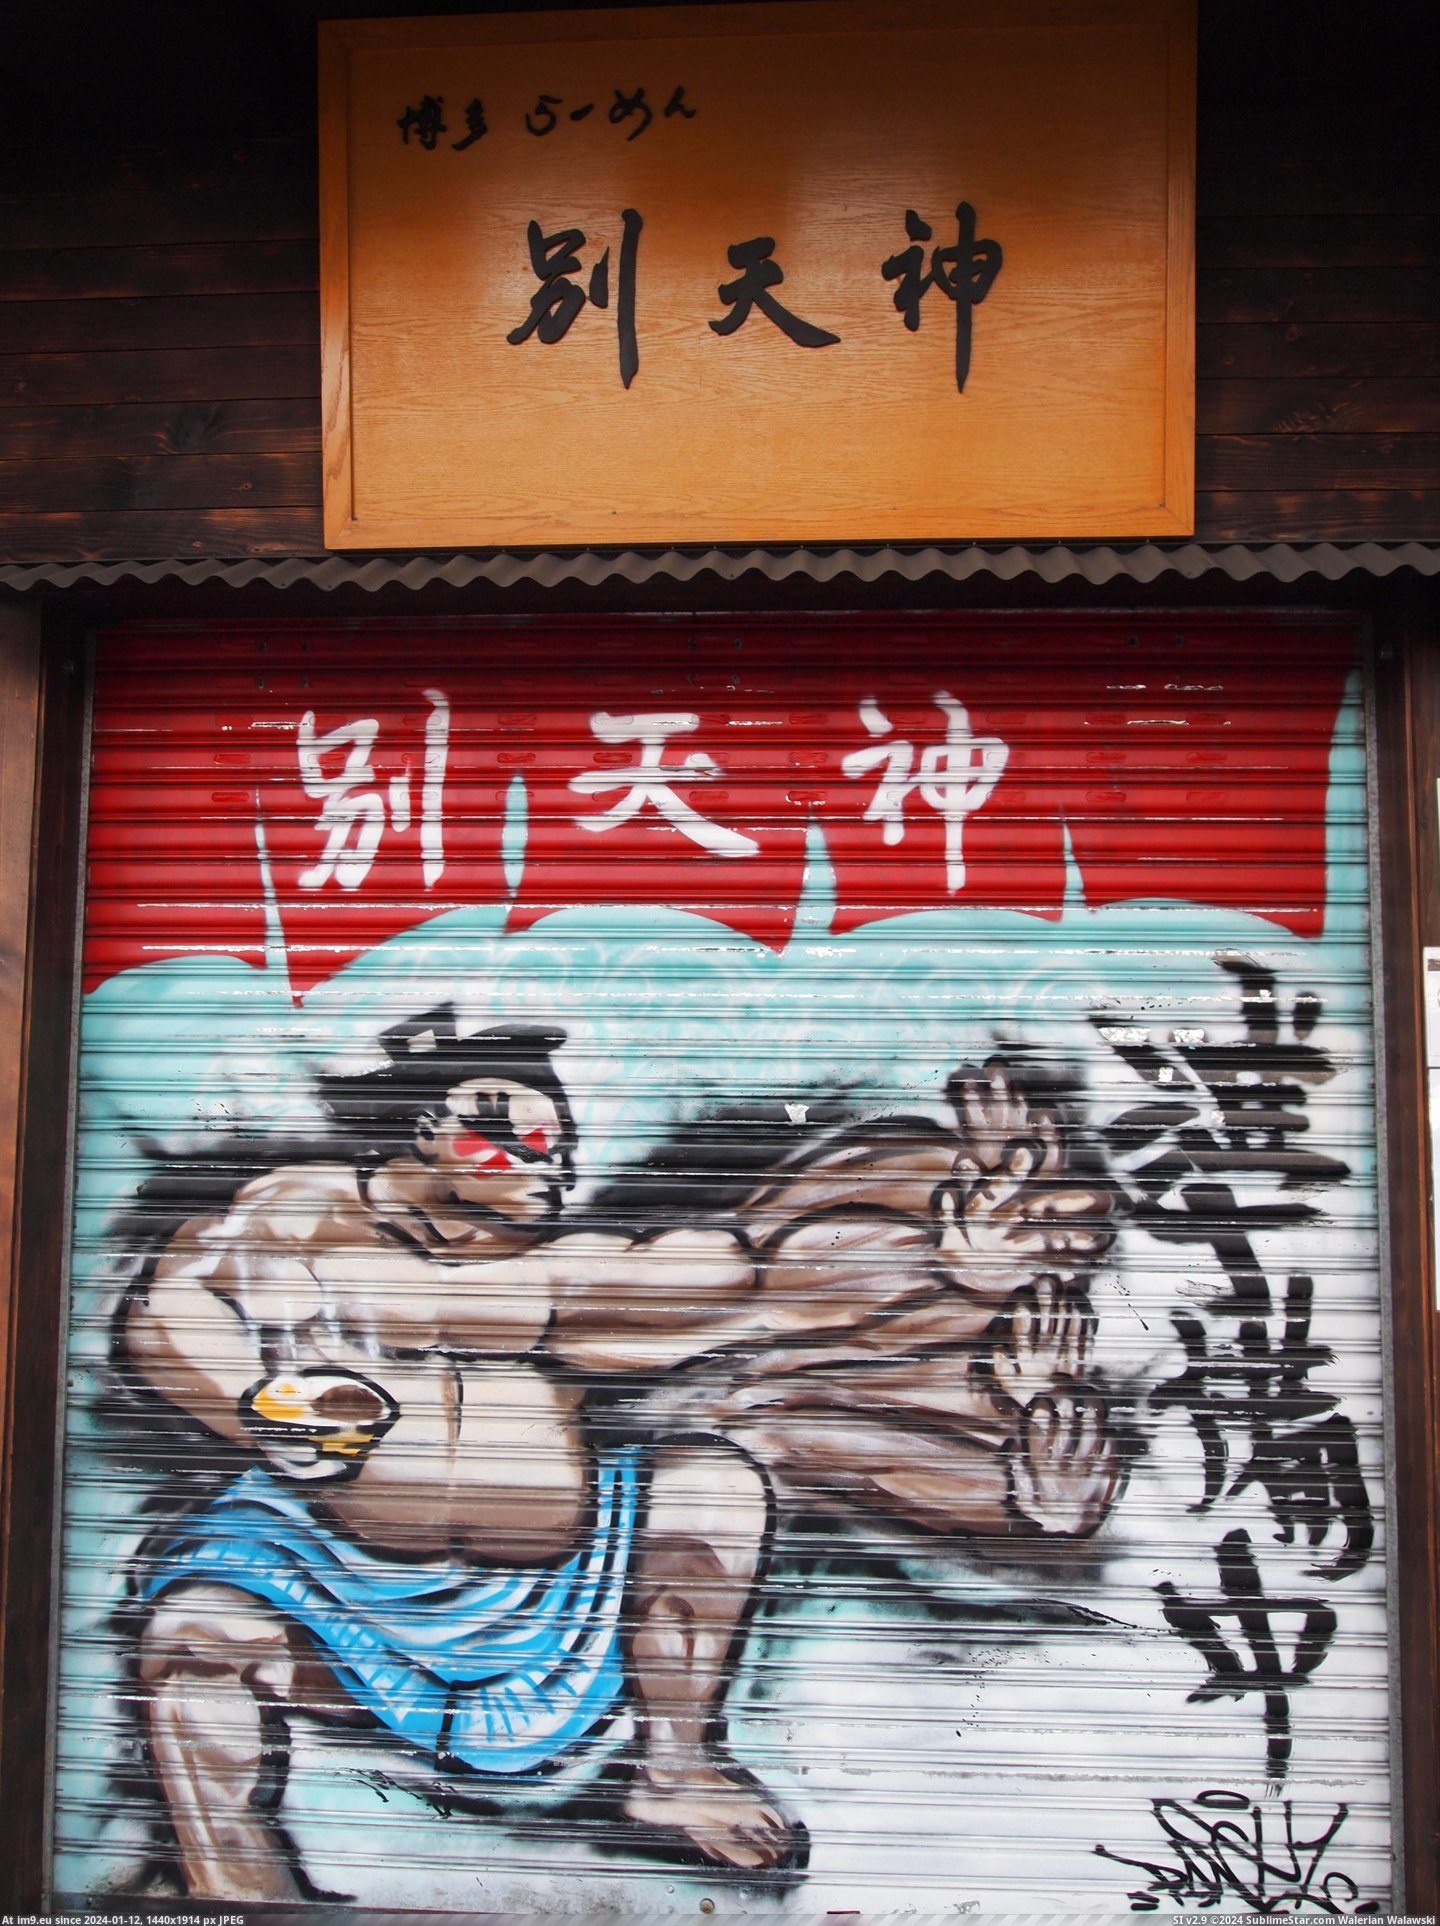 #Gaming #Art #Fighter #Hong #Kong #Street #Graffiti [Gaming] Street Fighter graffiti art in Hong Kong Pic. (Bild von album My r/GAMING favs))